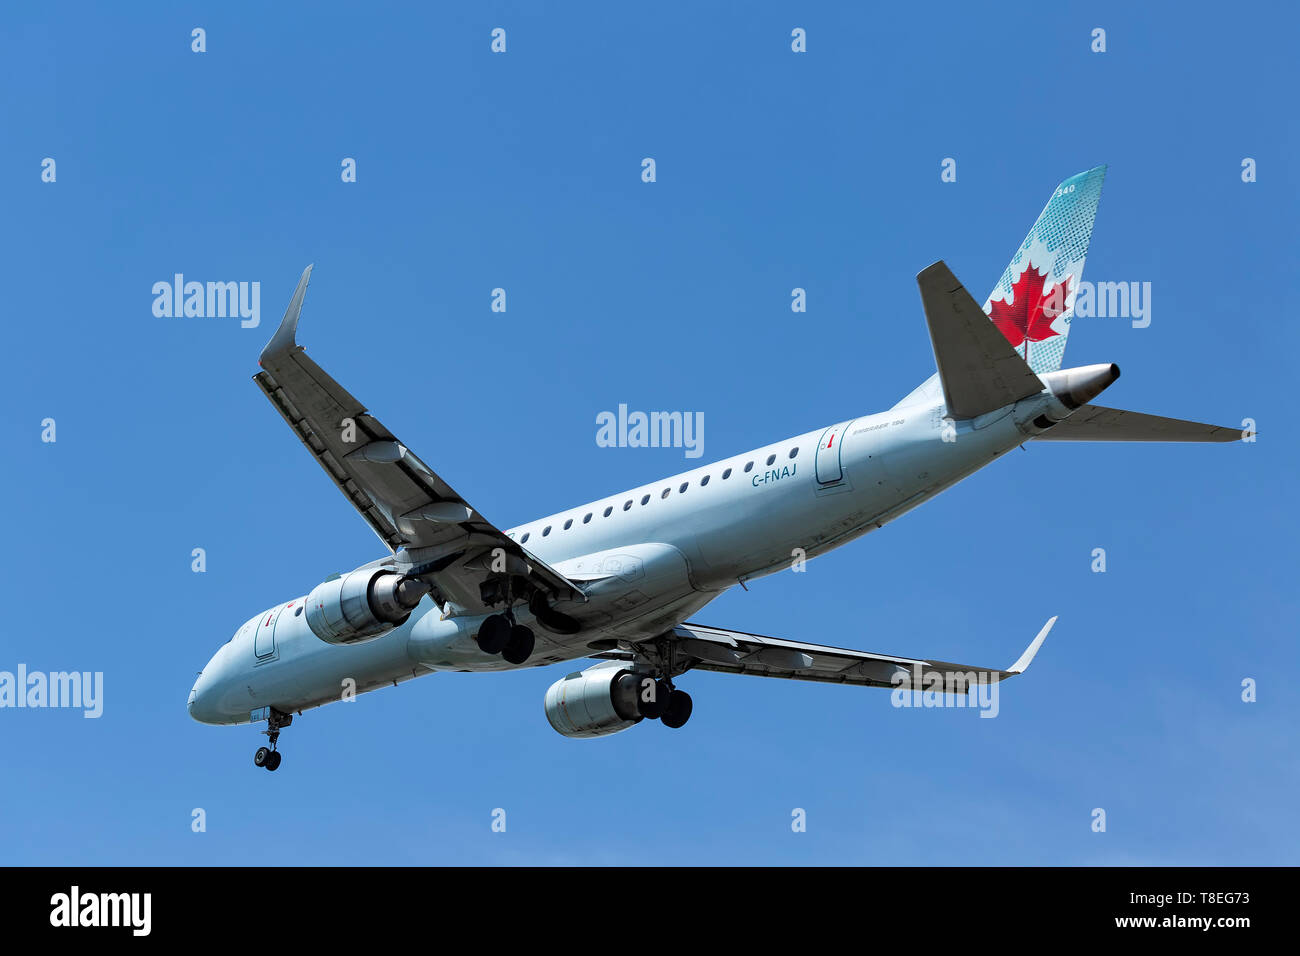 Passenger jet plane landing with wheels down. Toronto Ontario Canada. Stock Photo